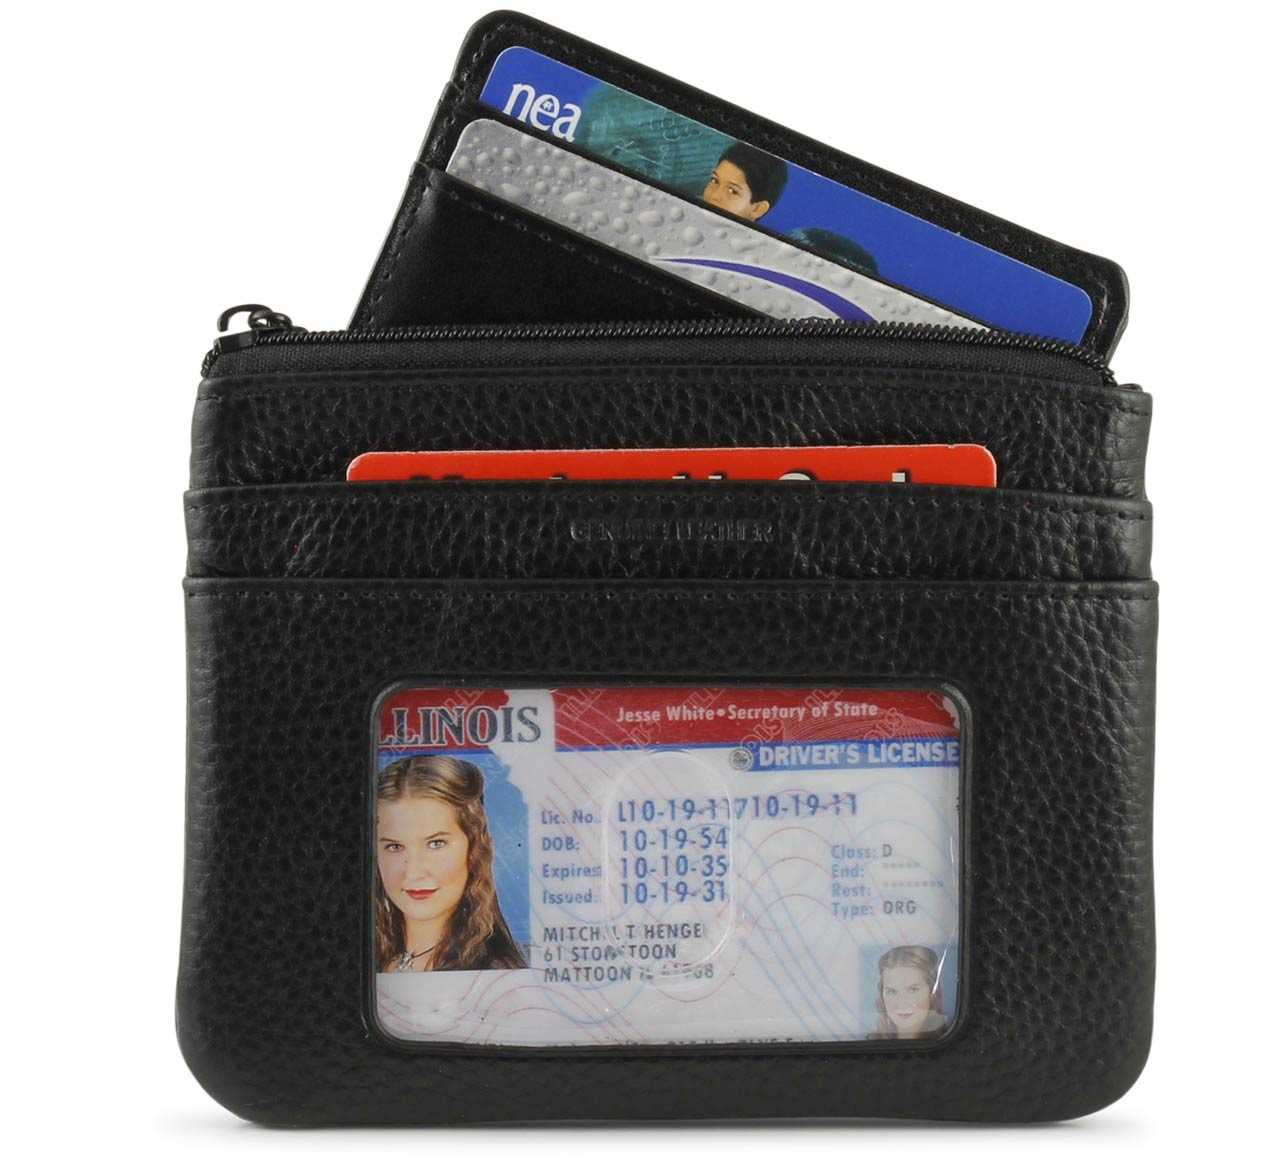 Women RFID Blocking Leather Accordion Wallet Credit Card 